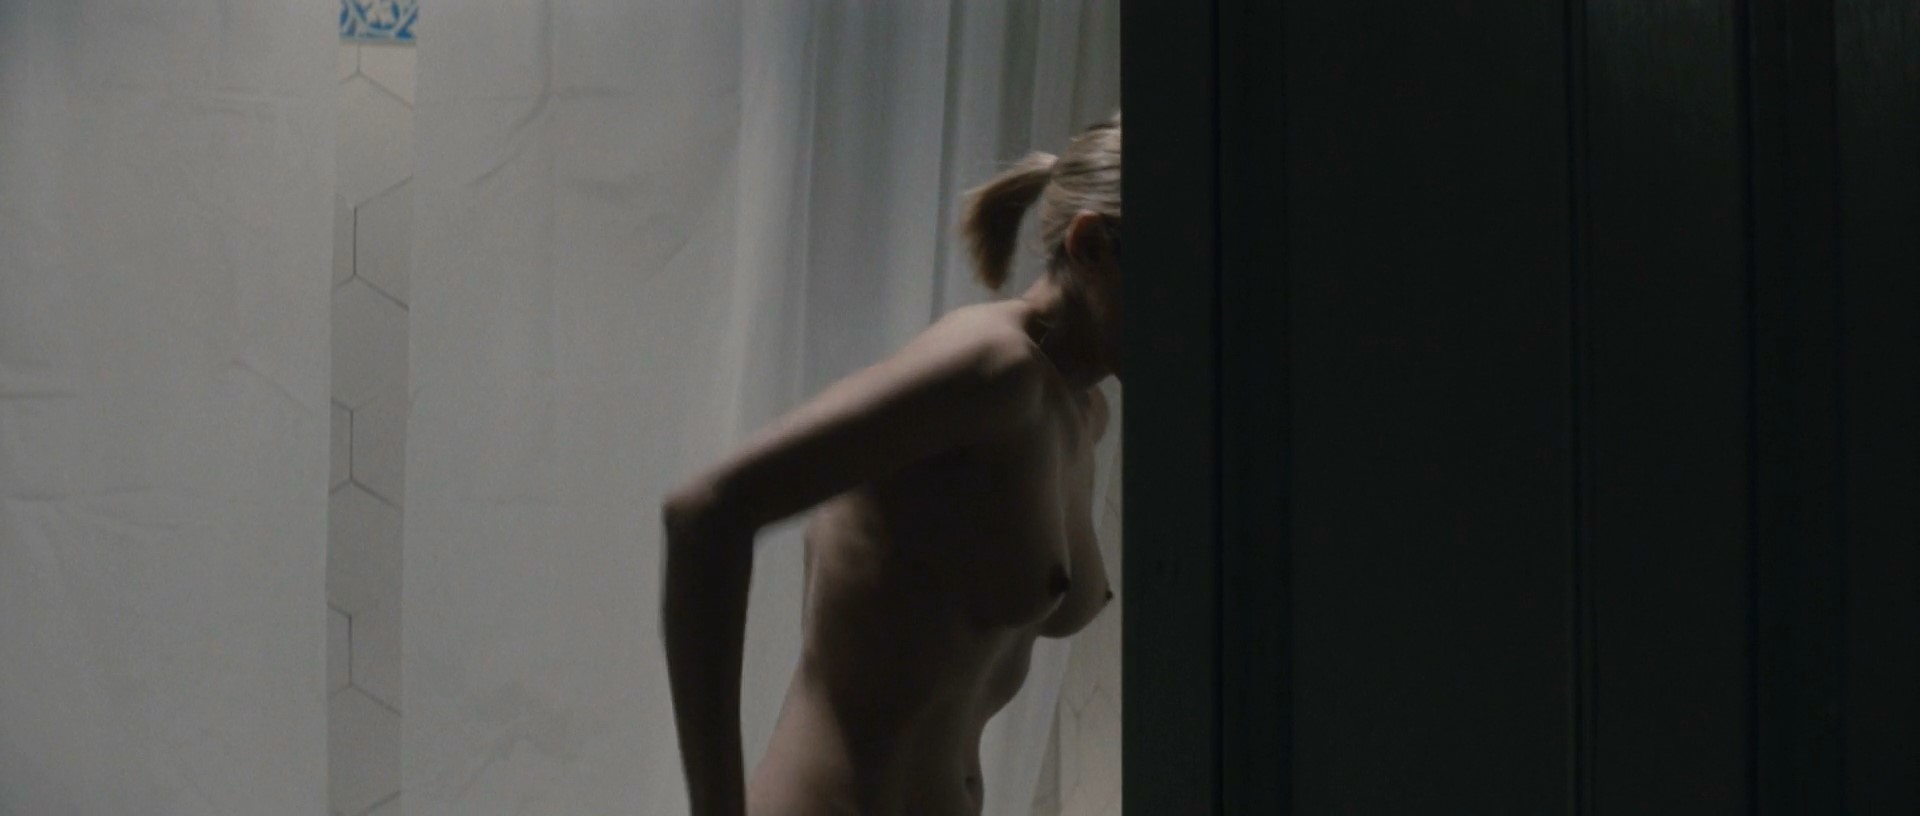 Lena Headey, Michelle Duncan, etc - The Broken (2008) HD 1080p